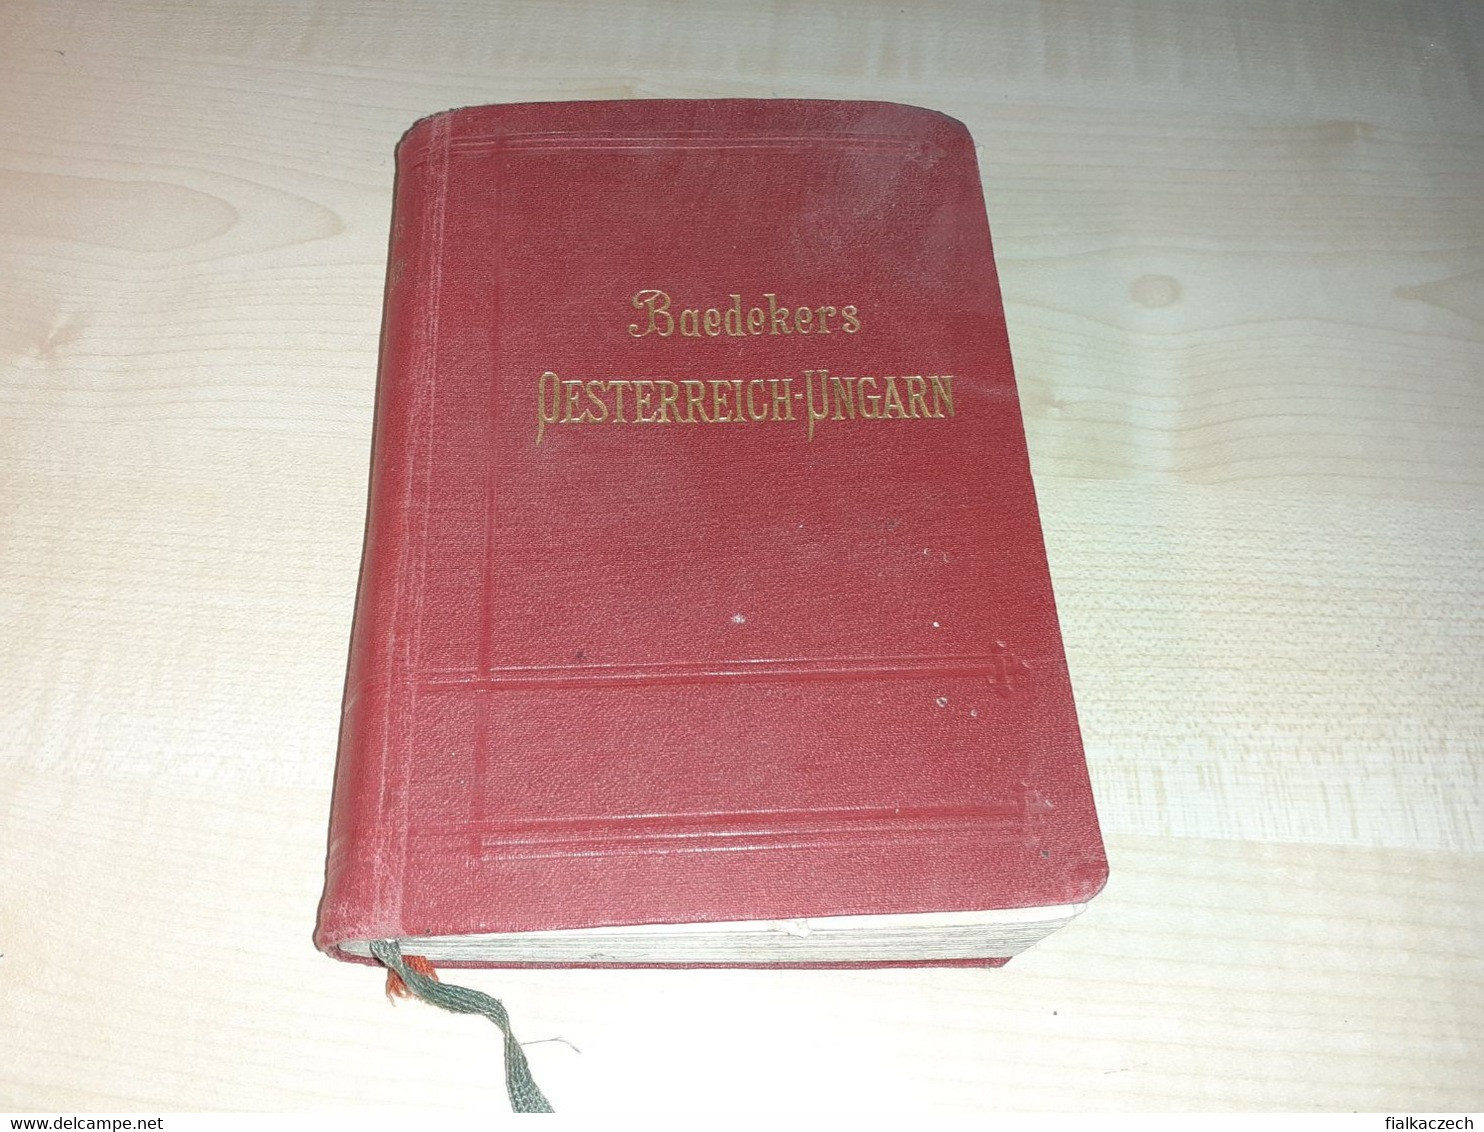 Baedekers, Österreich - Ungarn, Belgrad, Cetinje, Bukarest, Tour Guide, 1910 - Leipzig, Austria - Hungary - Oostenrijk